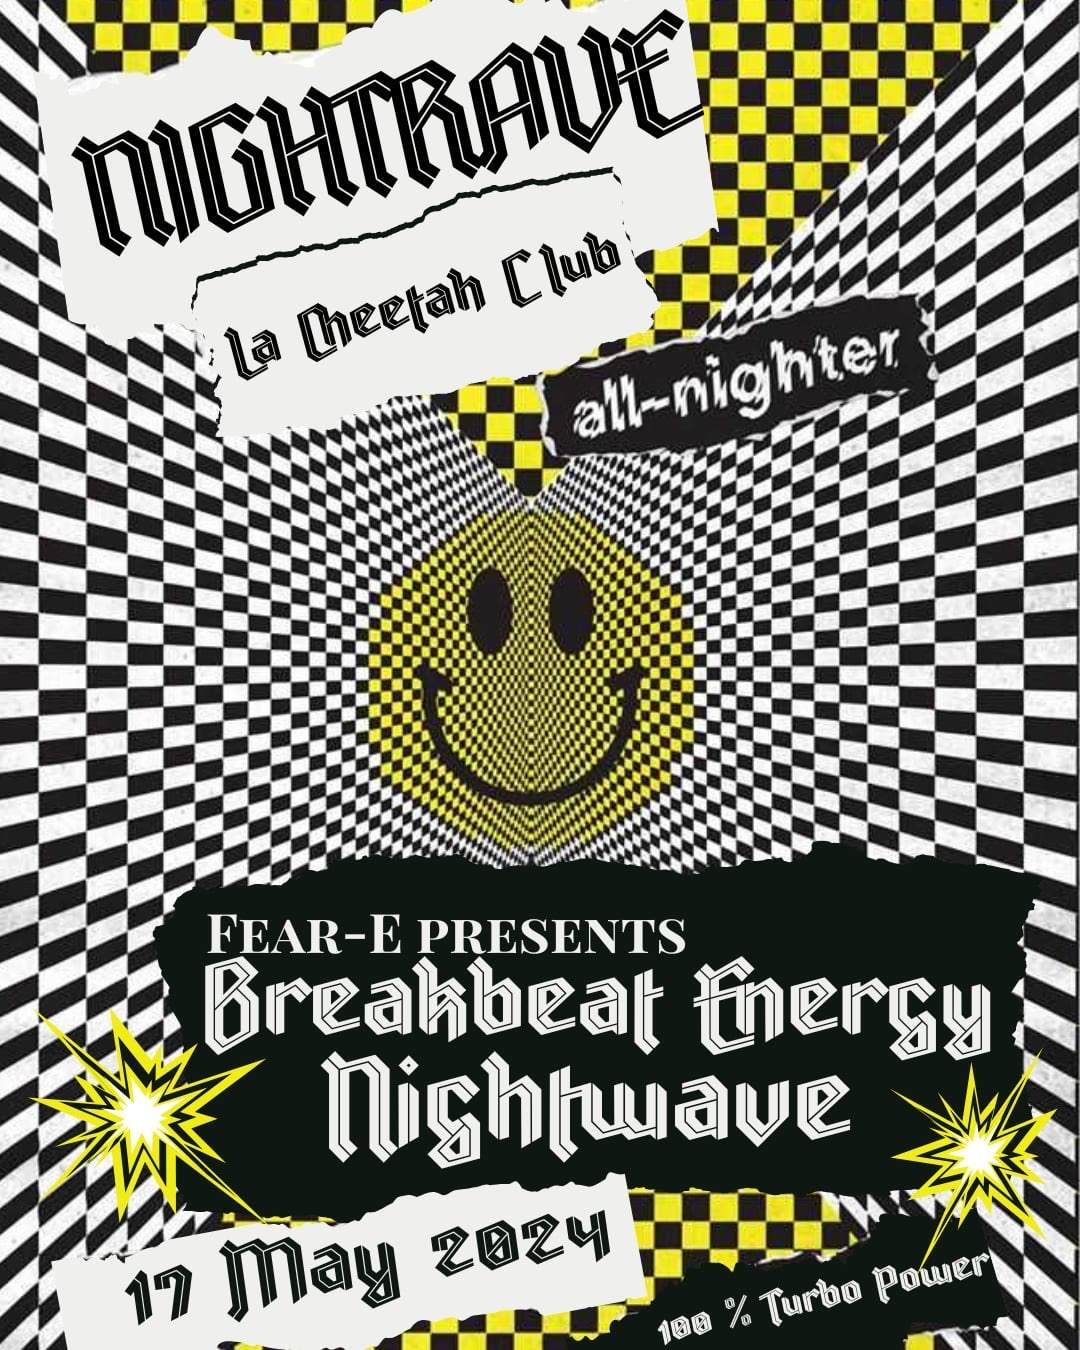 Nightrave with Nightwave & Breakbeat Energy - Página frontal